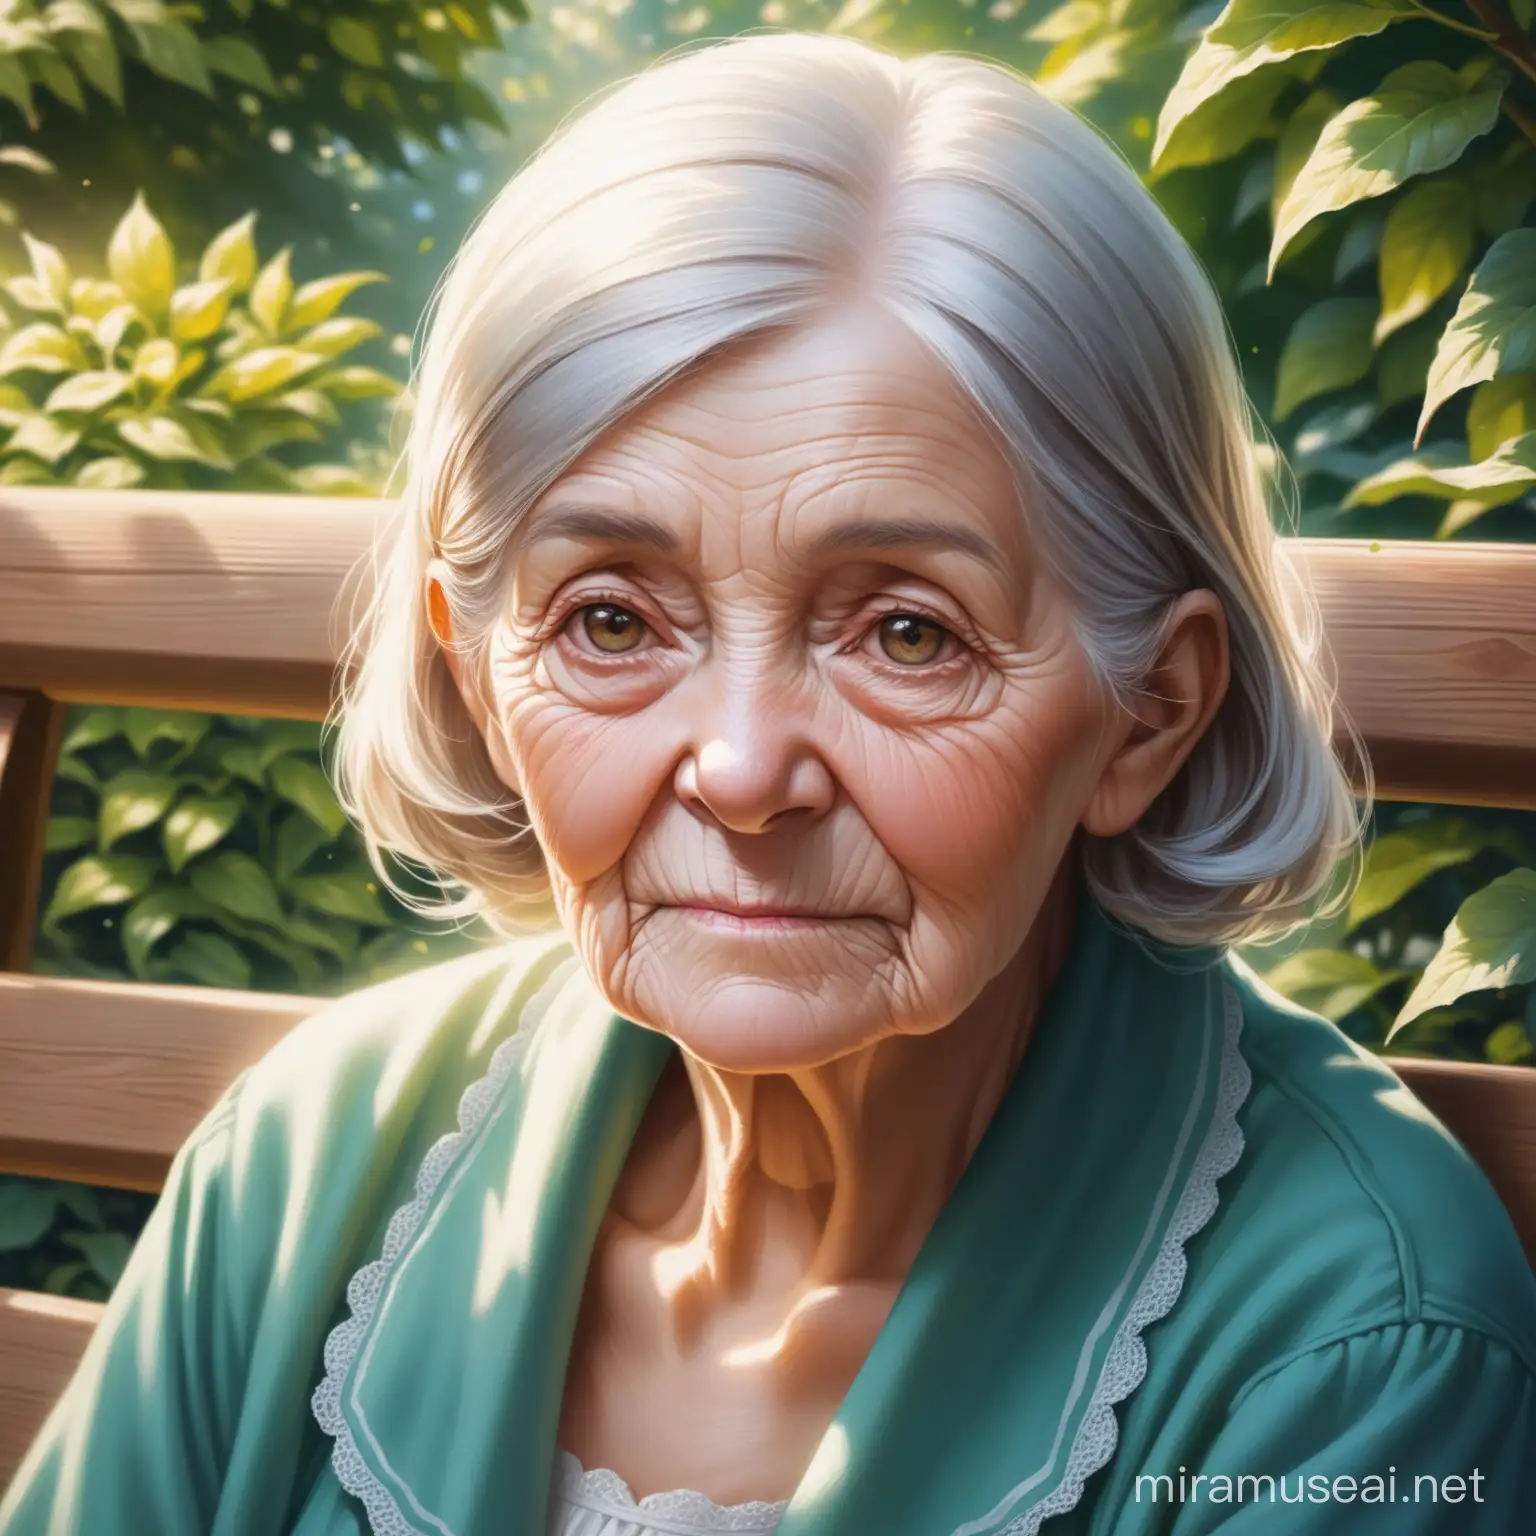 Elderly Woman Enjoying Serenity in Garden Setting